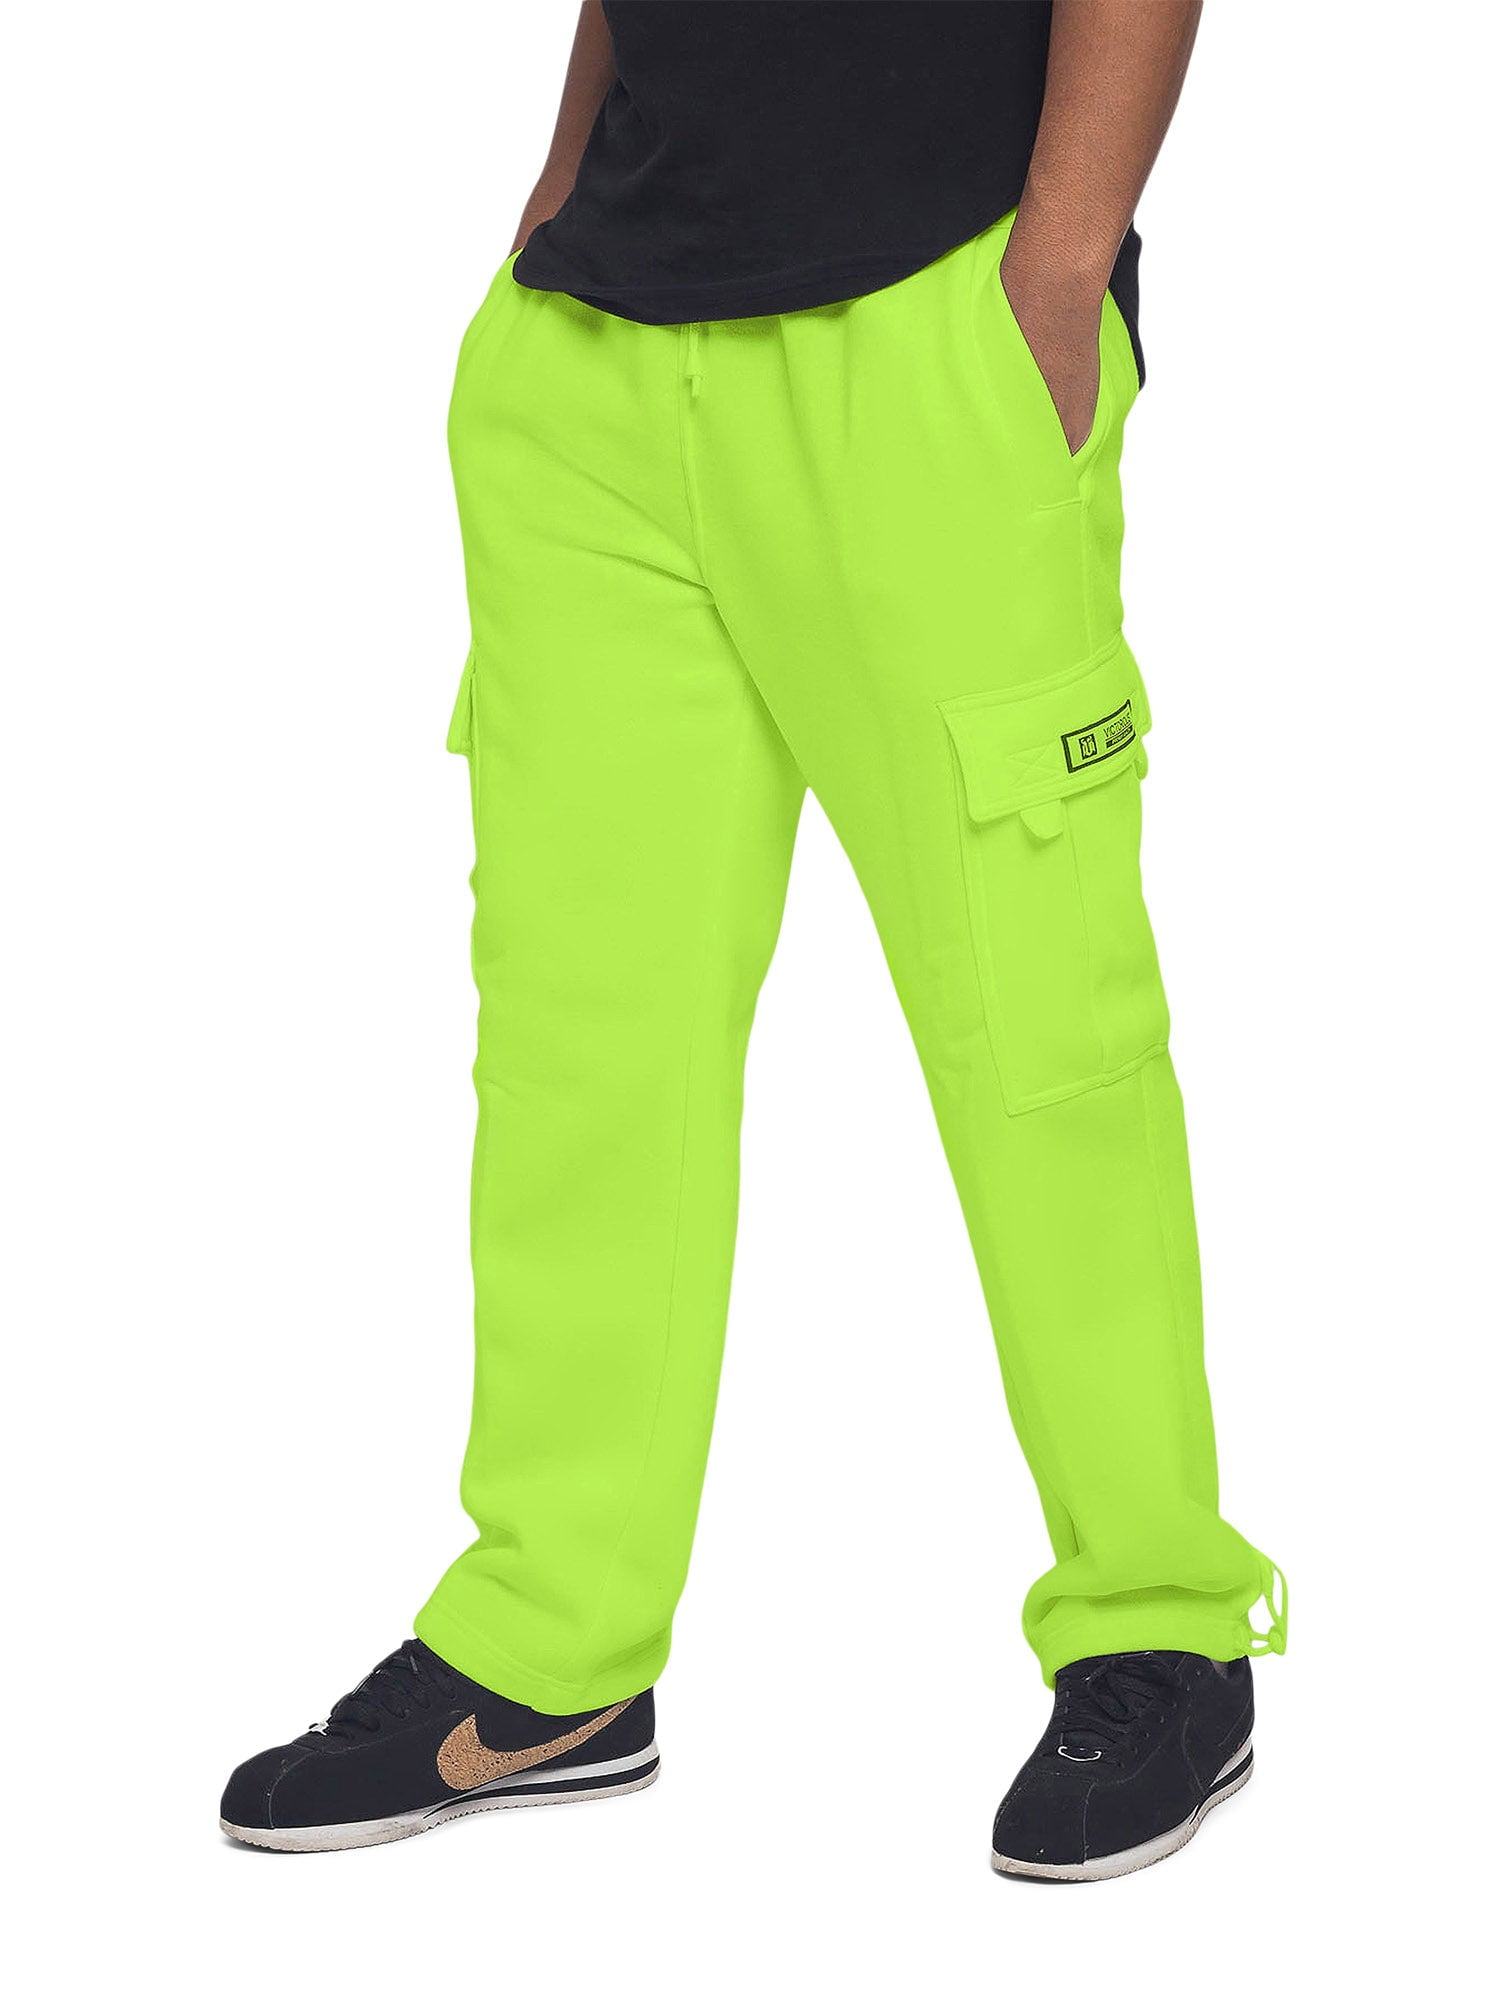 Cargo Pants - High Waisted - Full Length - Lime Green